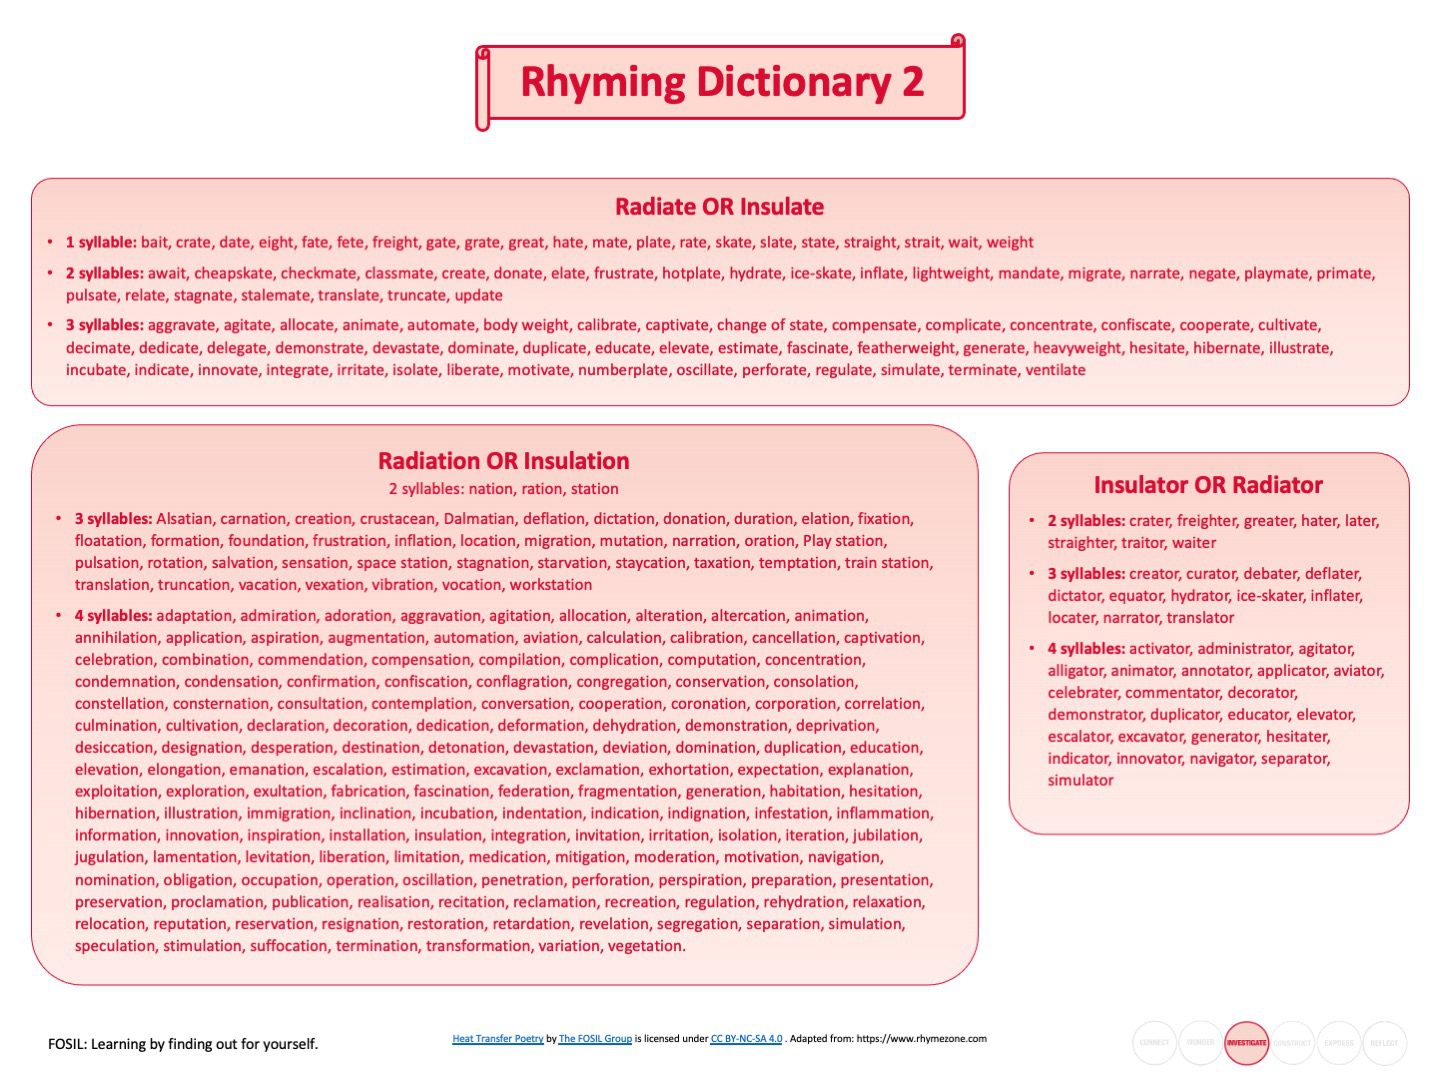 Rhyming dictionary 2